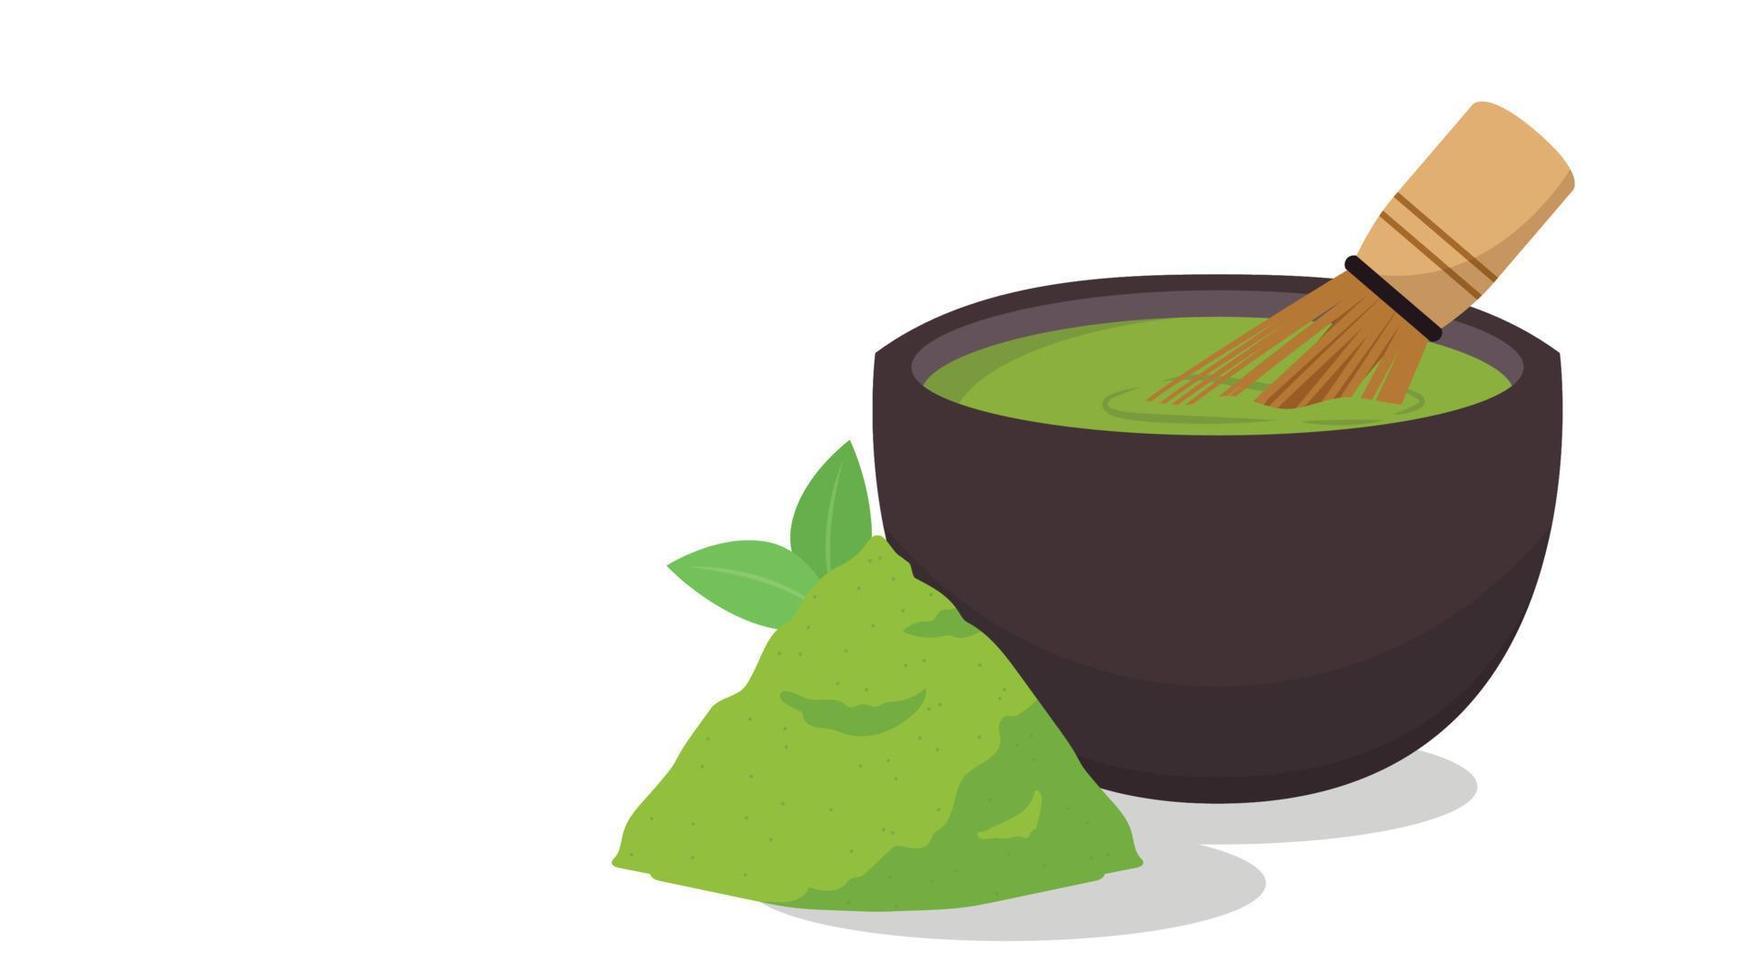 Matcha-Cup-Vektor. Grüner Tee-Vektor. Hintergrund. Plakatdesign mit grünem Tee. Tee-Schneebesen-Vektor. vektor